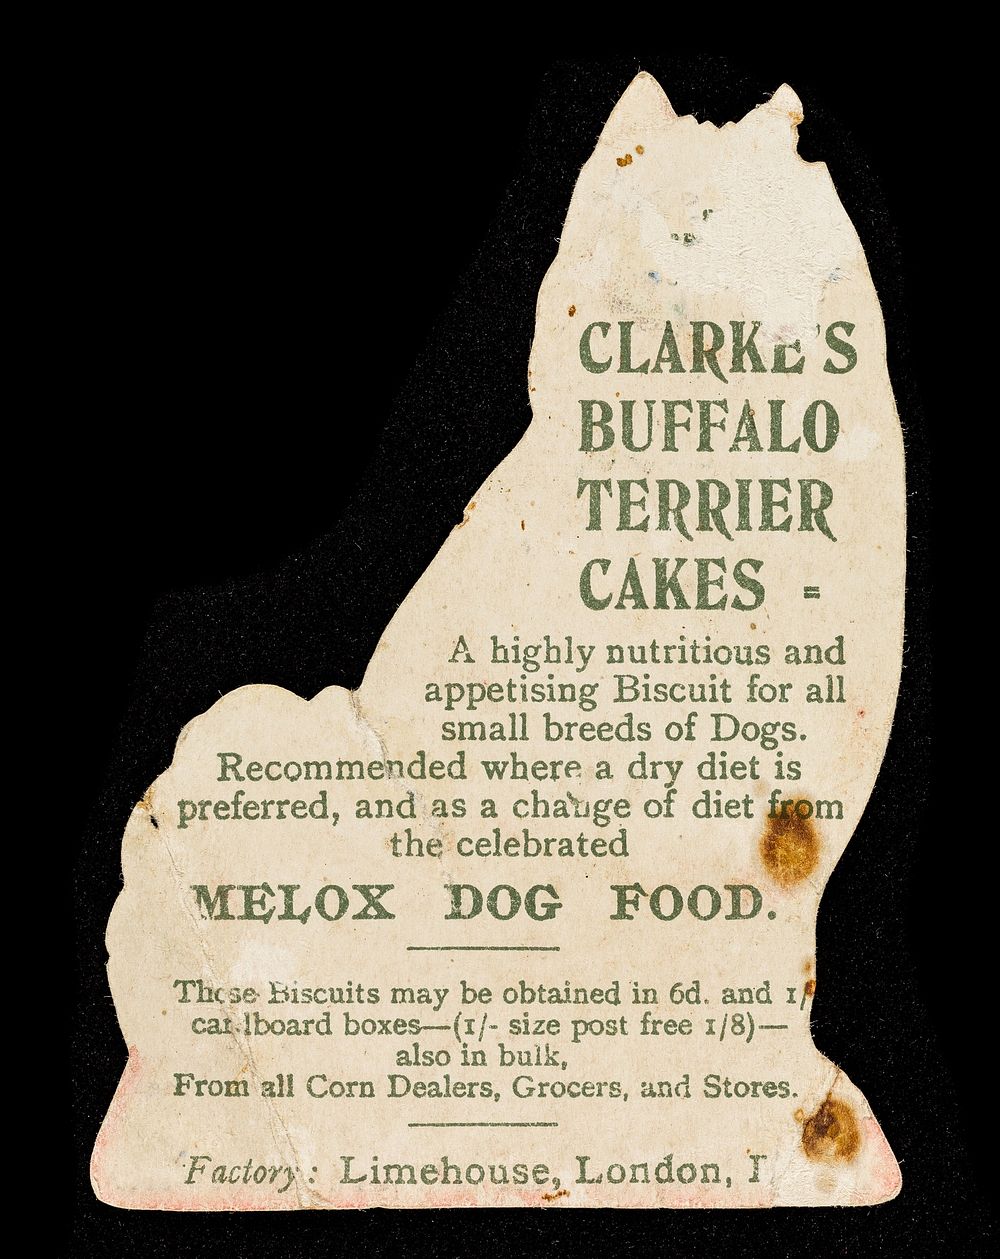 Clarke's Buffalo terrier cakes.